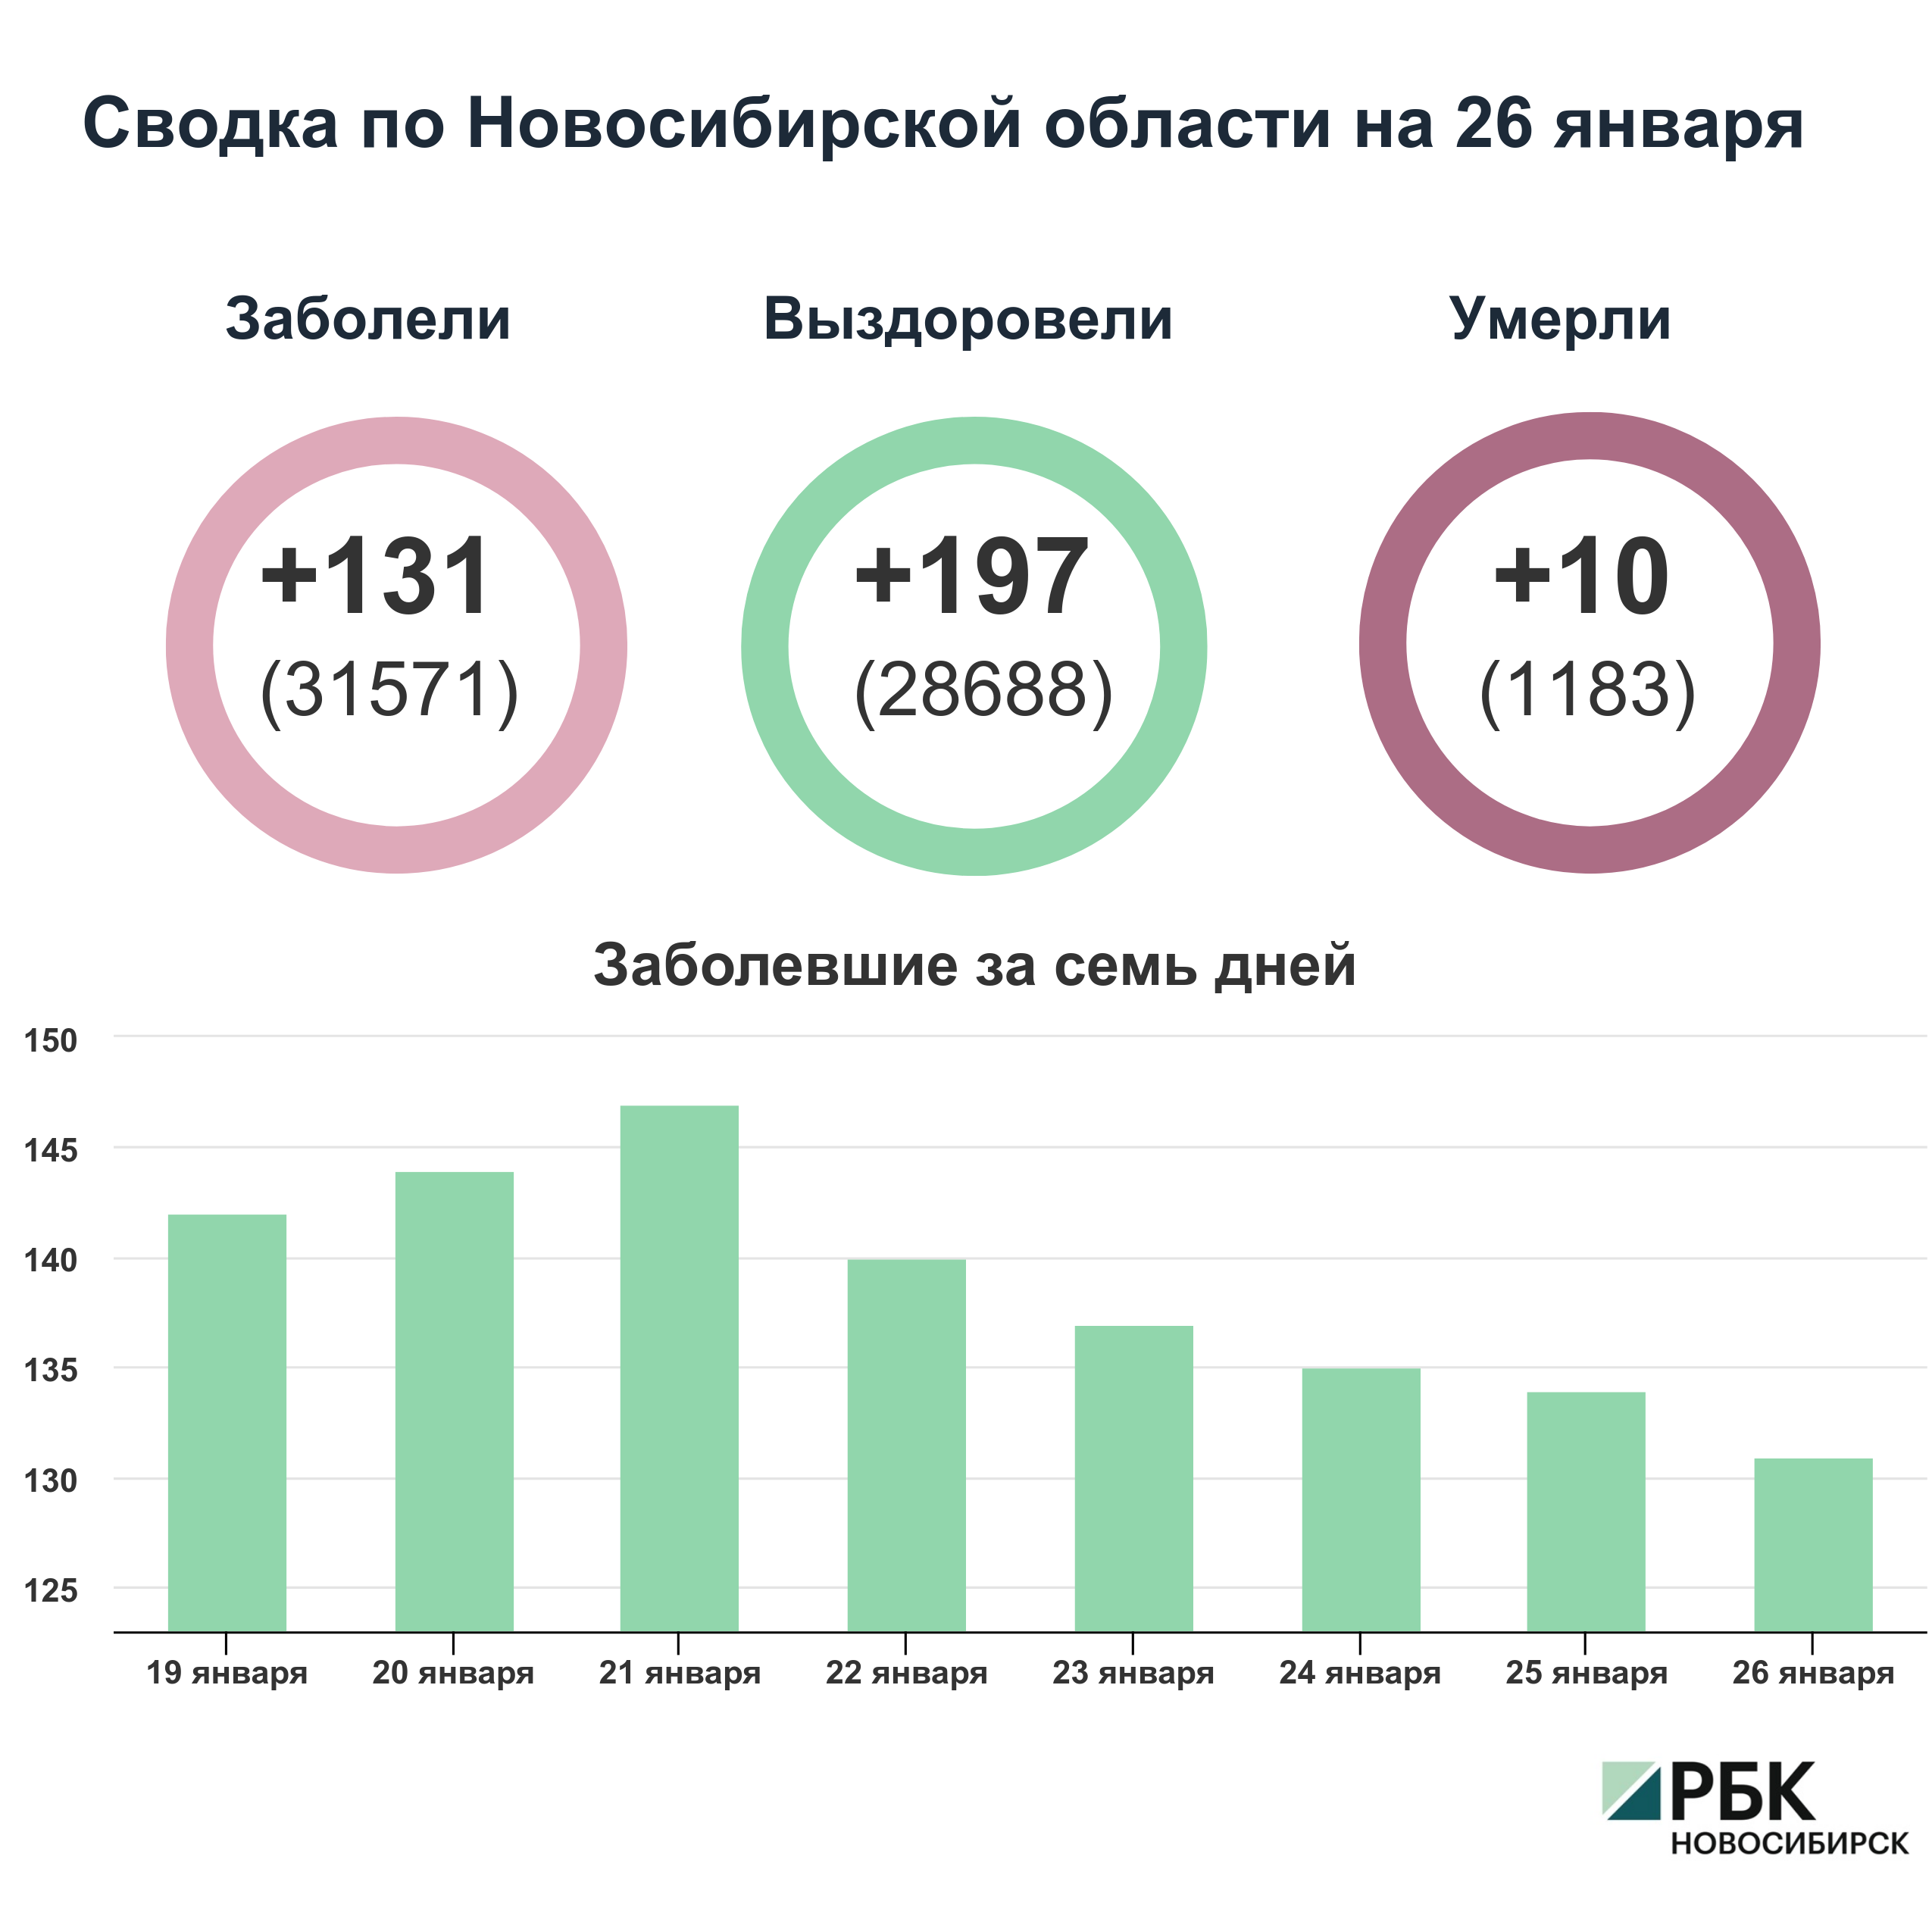 Коронавирус в Новосибирске: сводка на 26 января